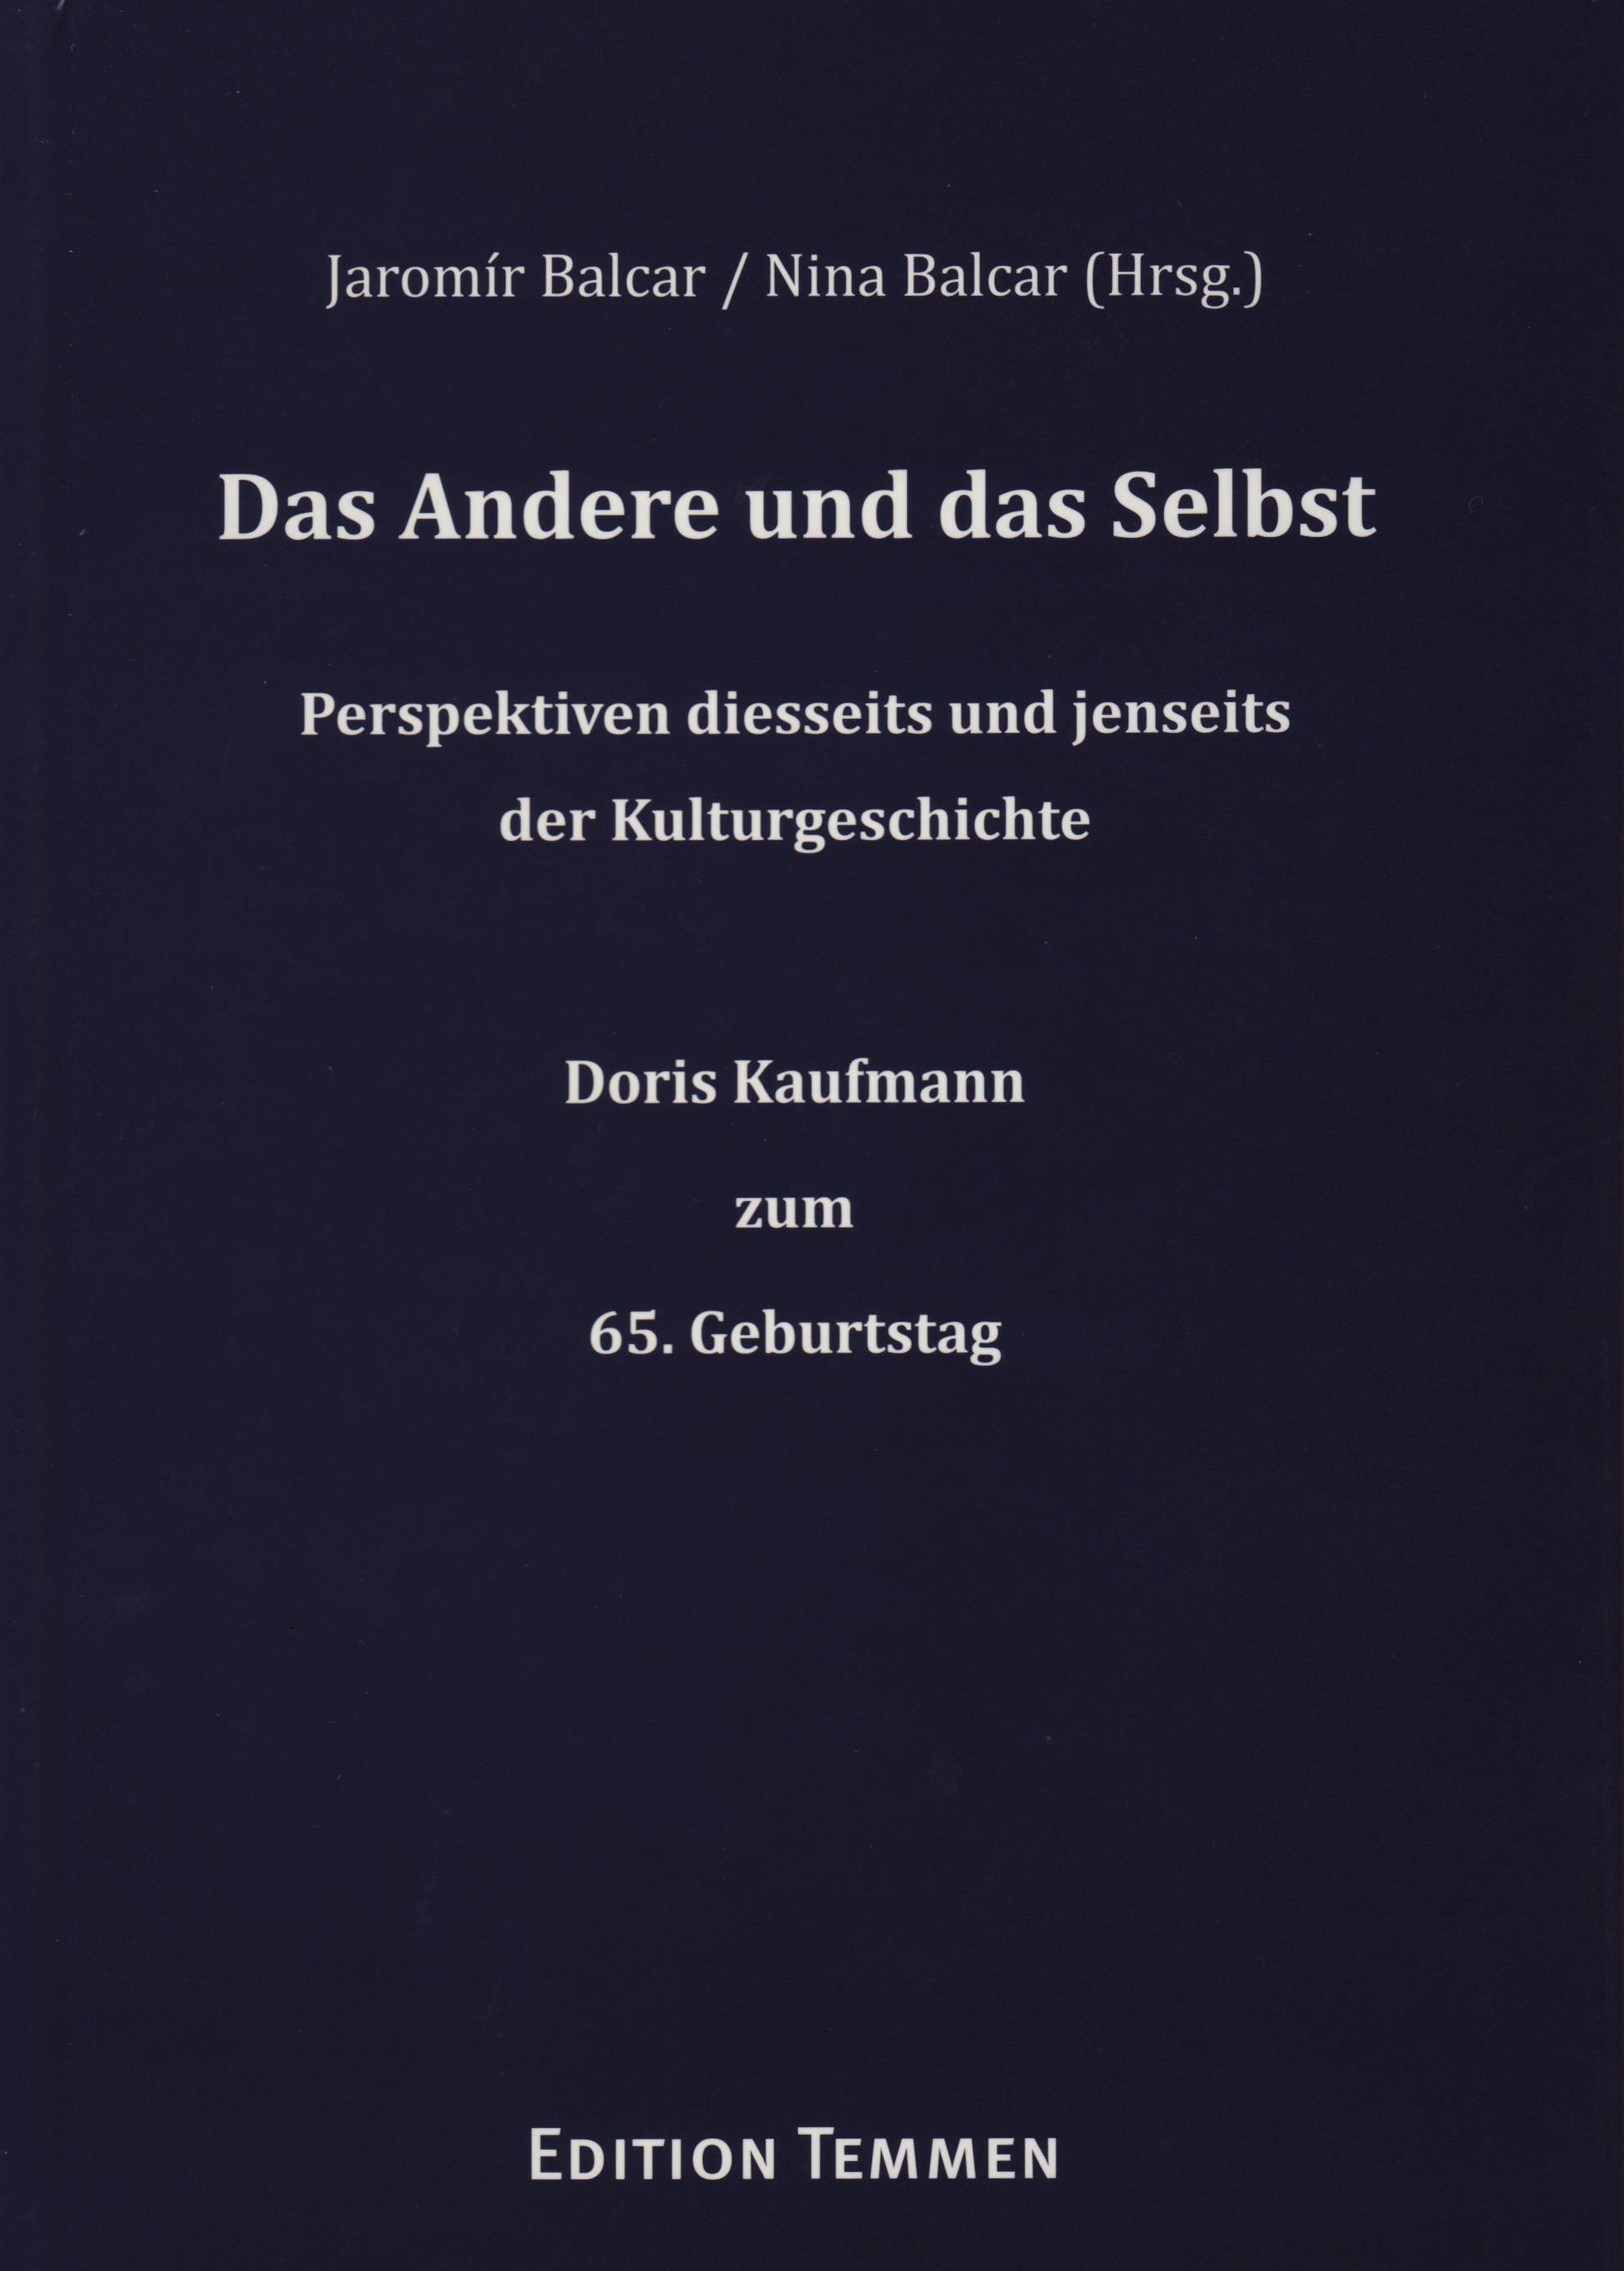 book cover: Jaromír Balcar/ Nina Balcar: Das Andere und das Selbst (2018)